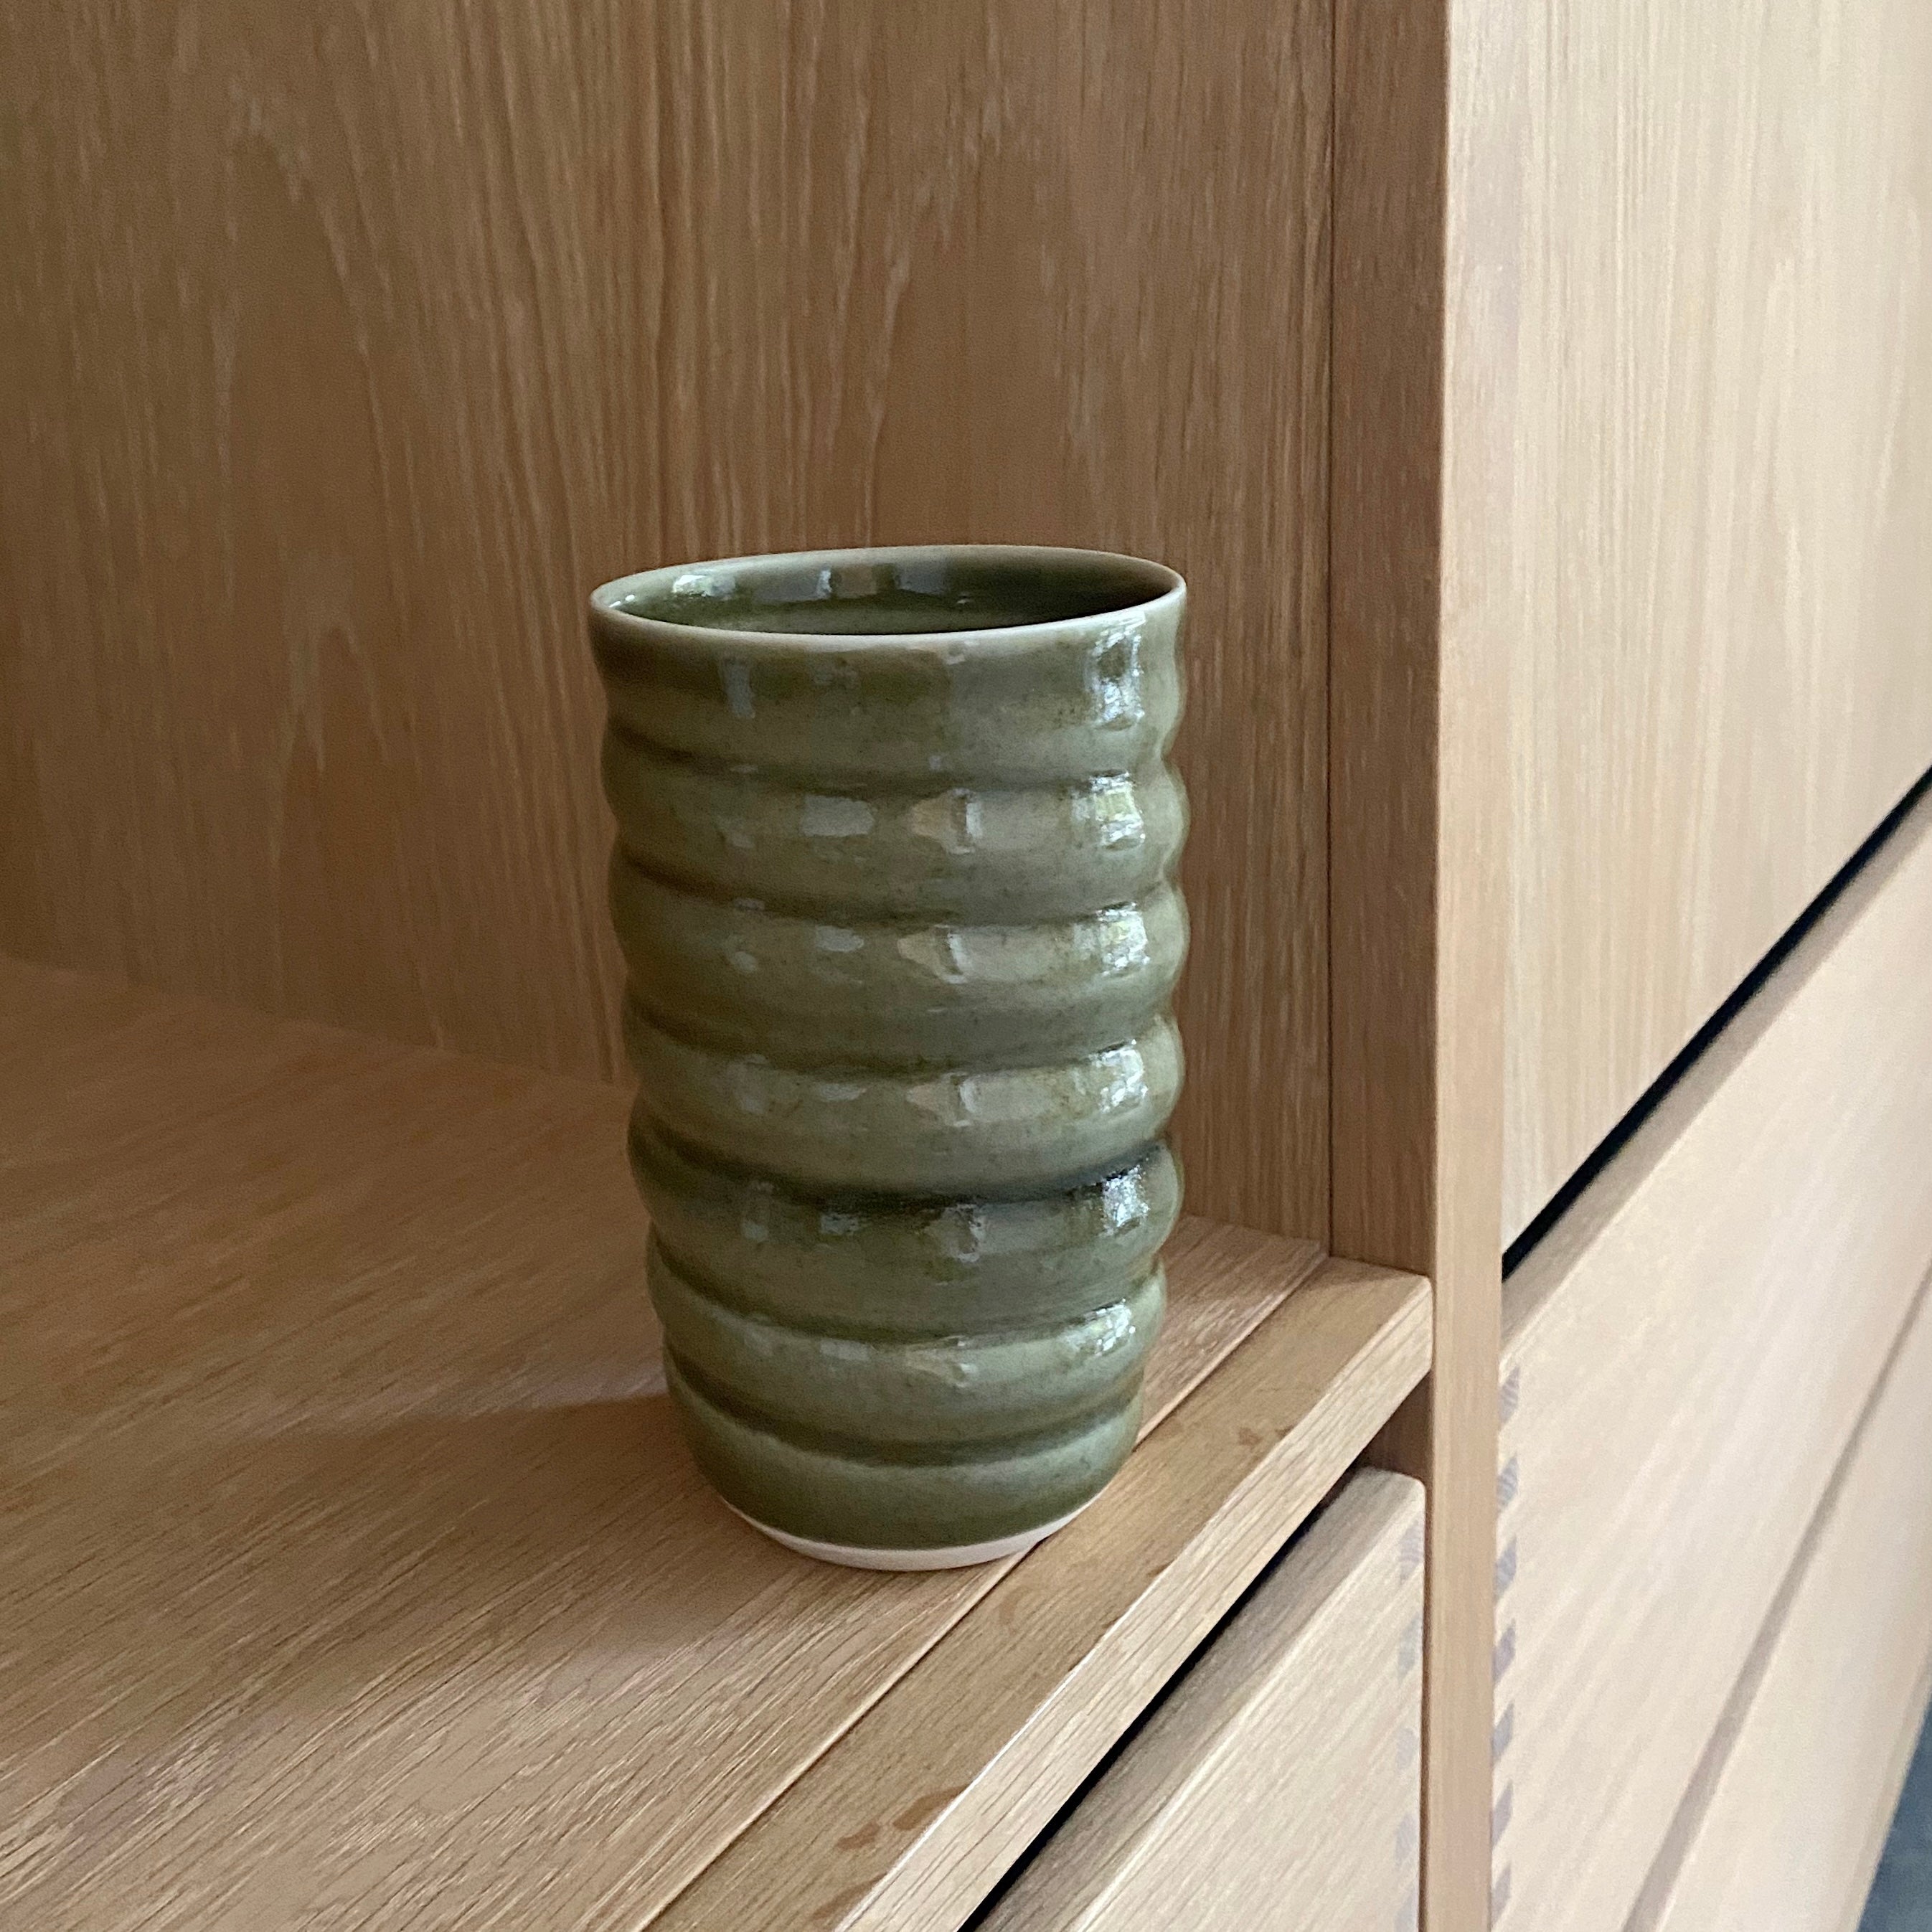 keramikvase i groen glasur til en smukke blomster. vil være en god gaveide til keramk og blomsterelskeren